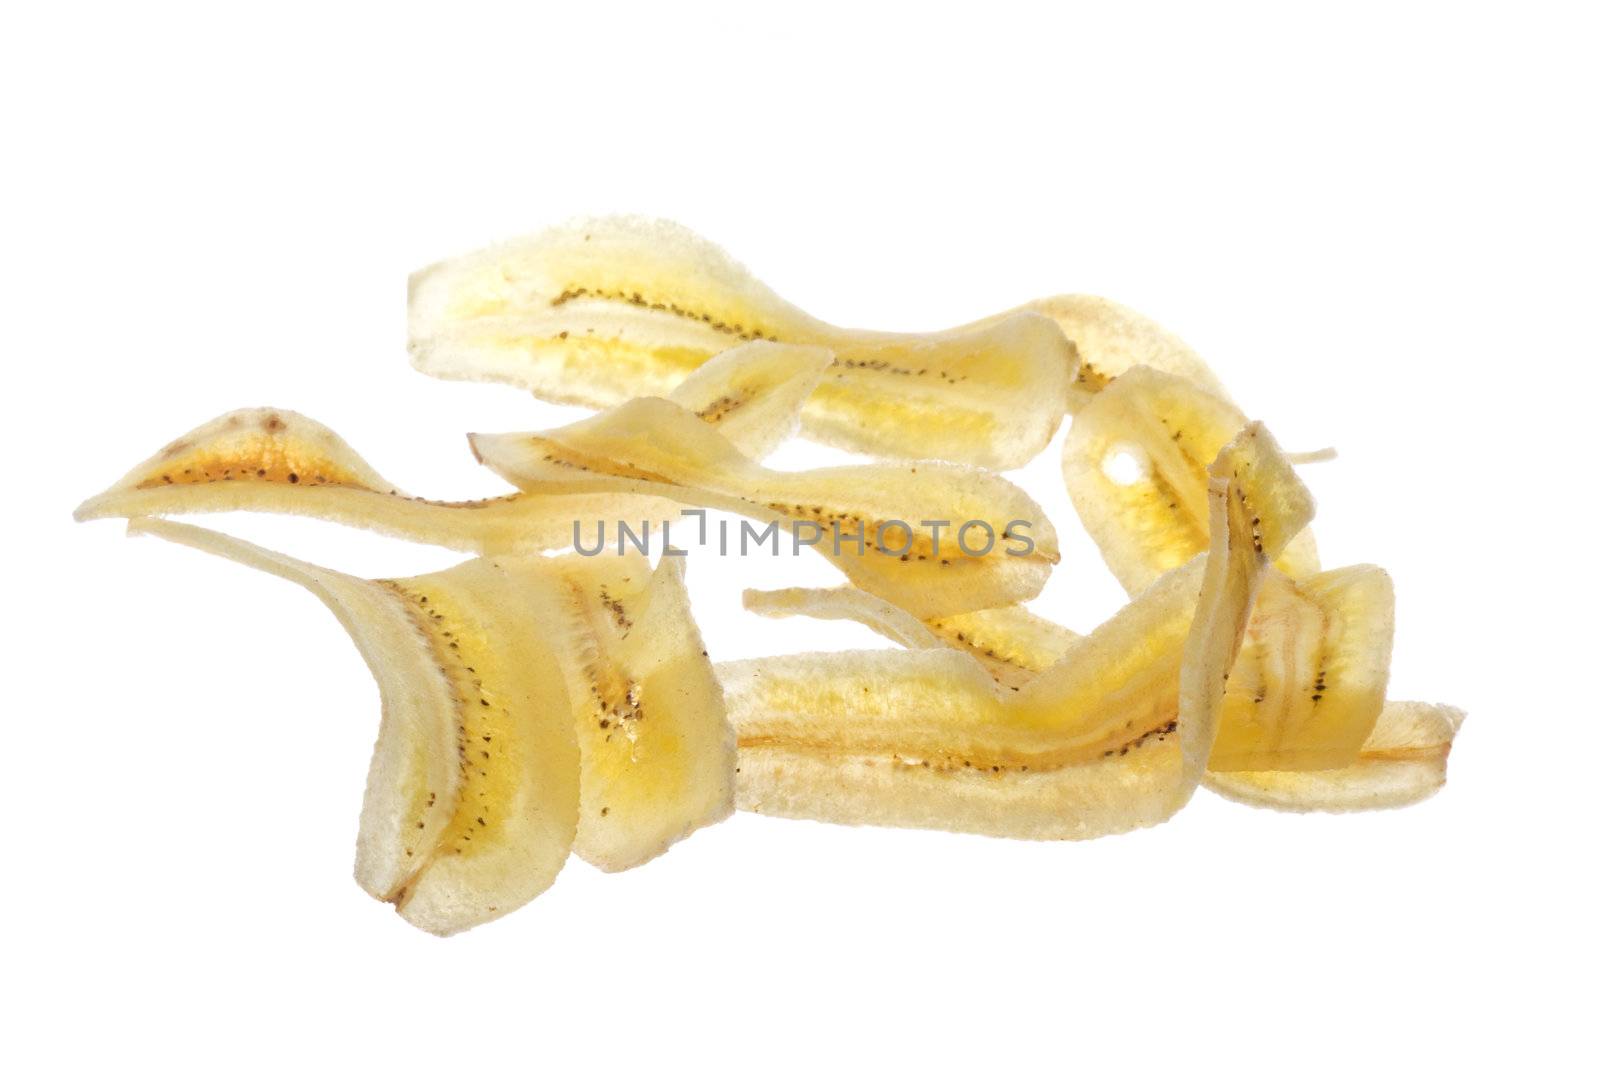 Isolated macro image of fried bananas.